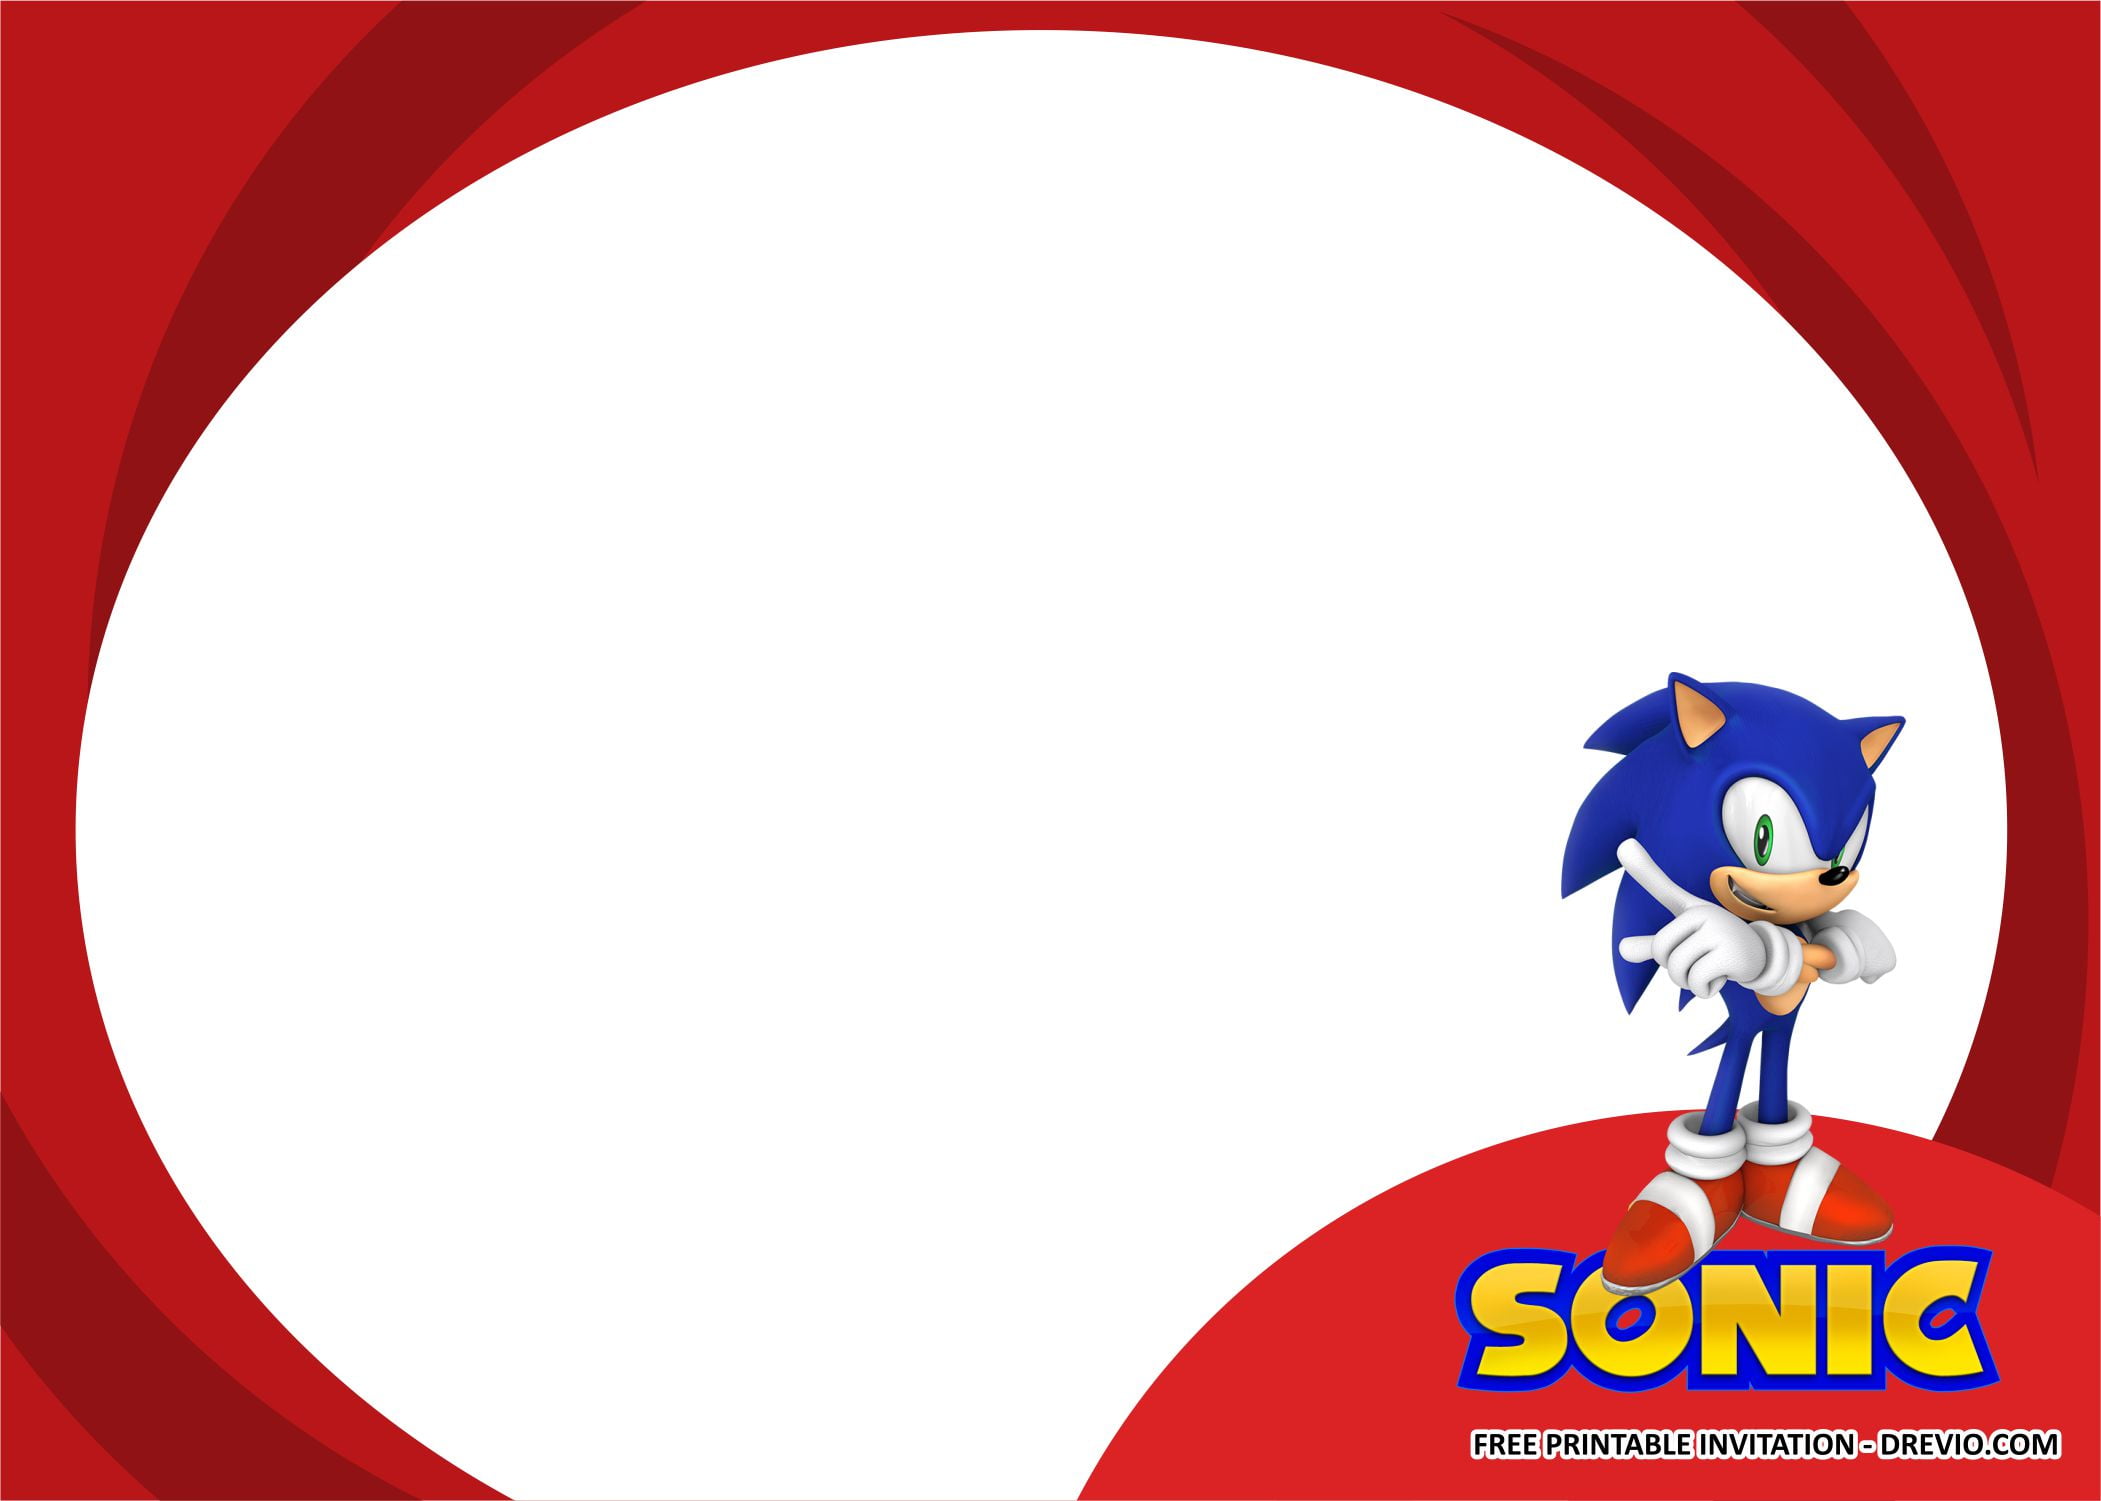 (FREE PRINTABLE) Sonic the Hedgehog Birthday Party Kits Templates